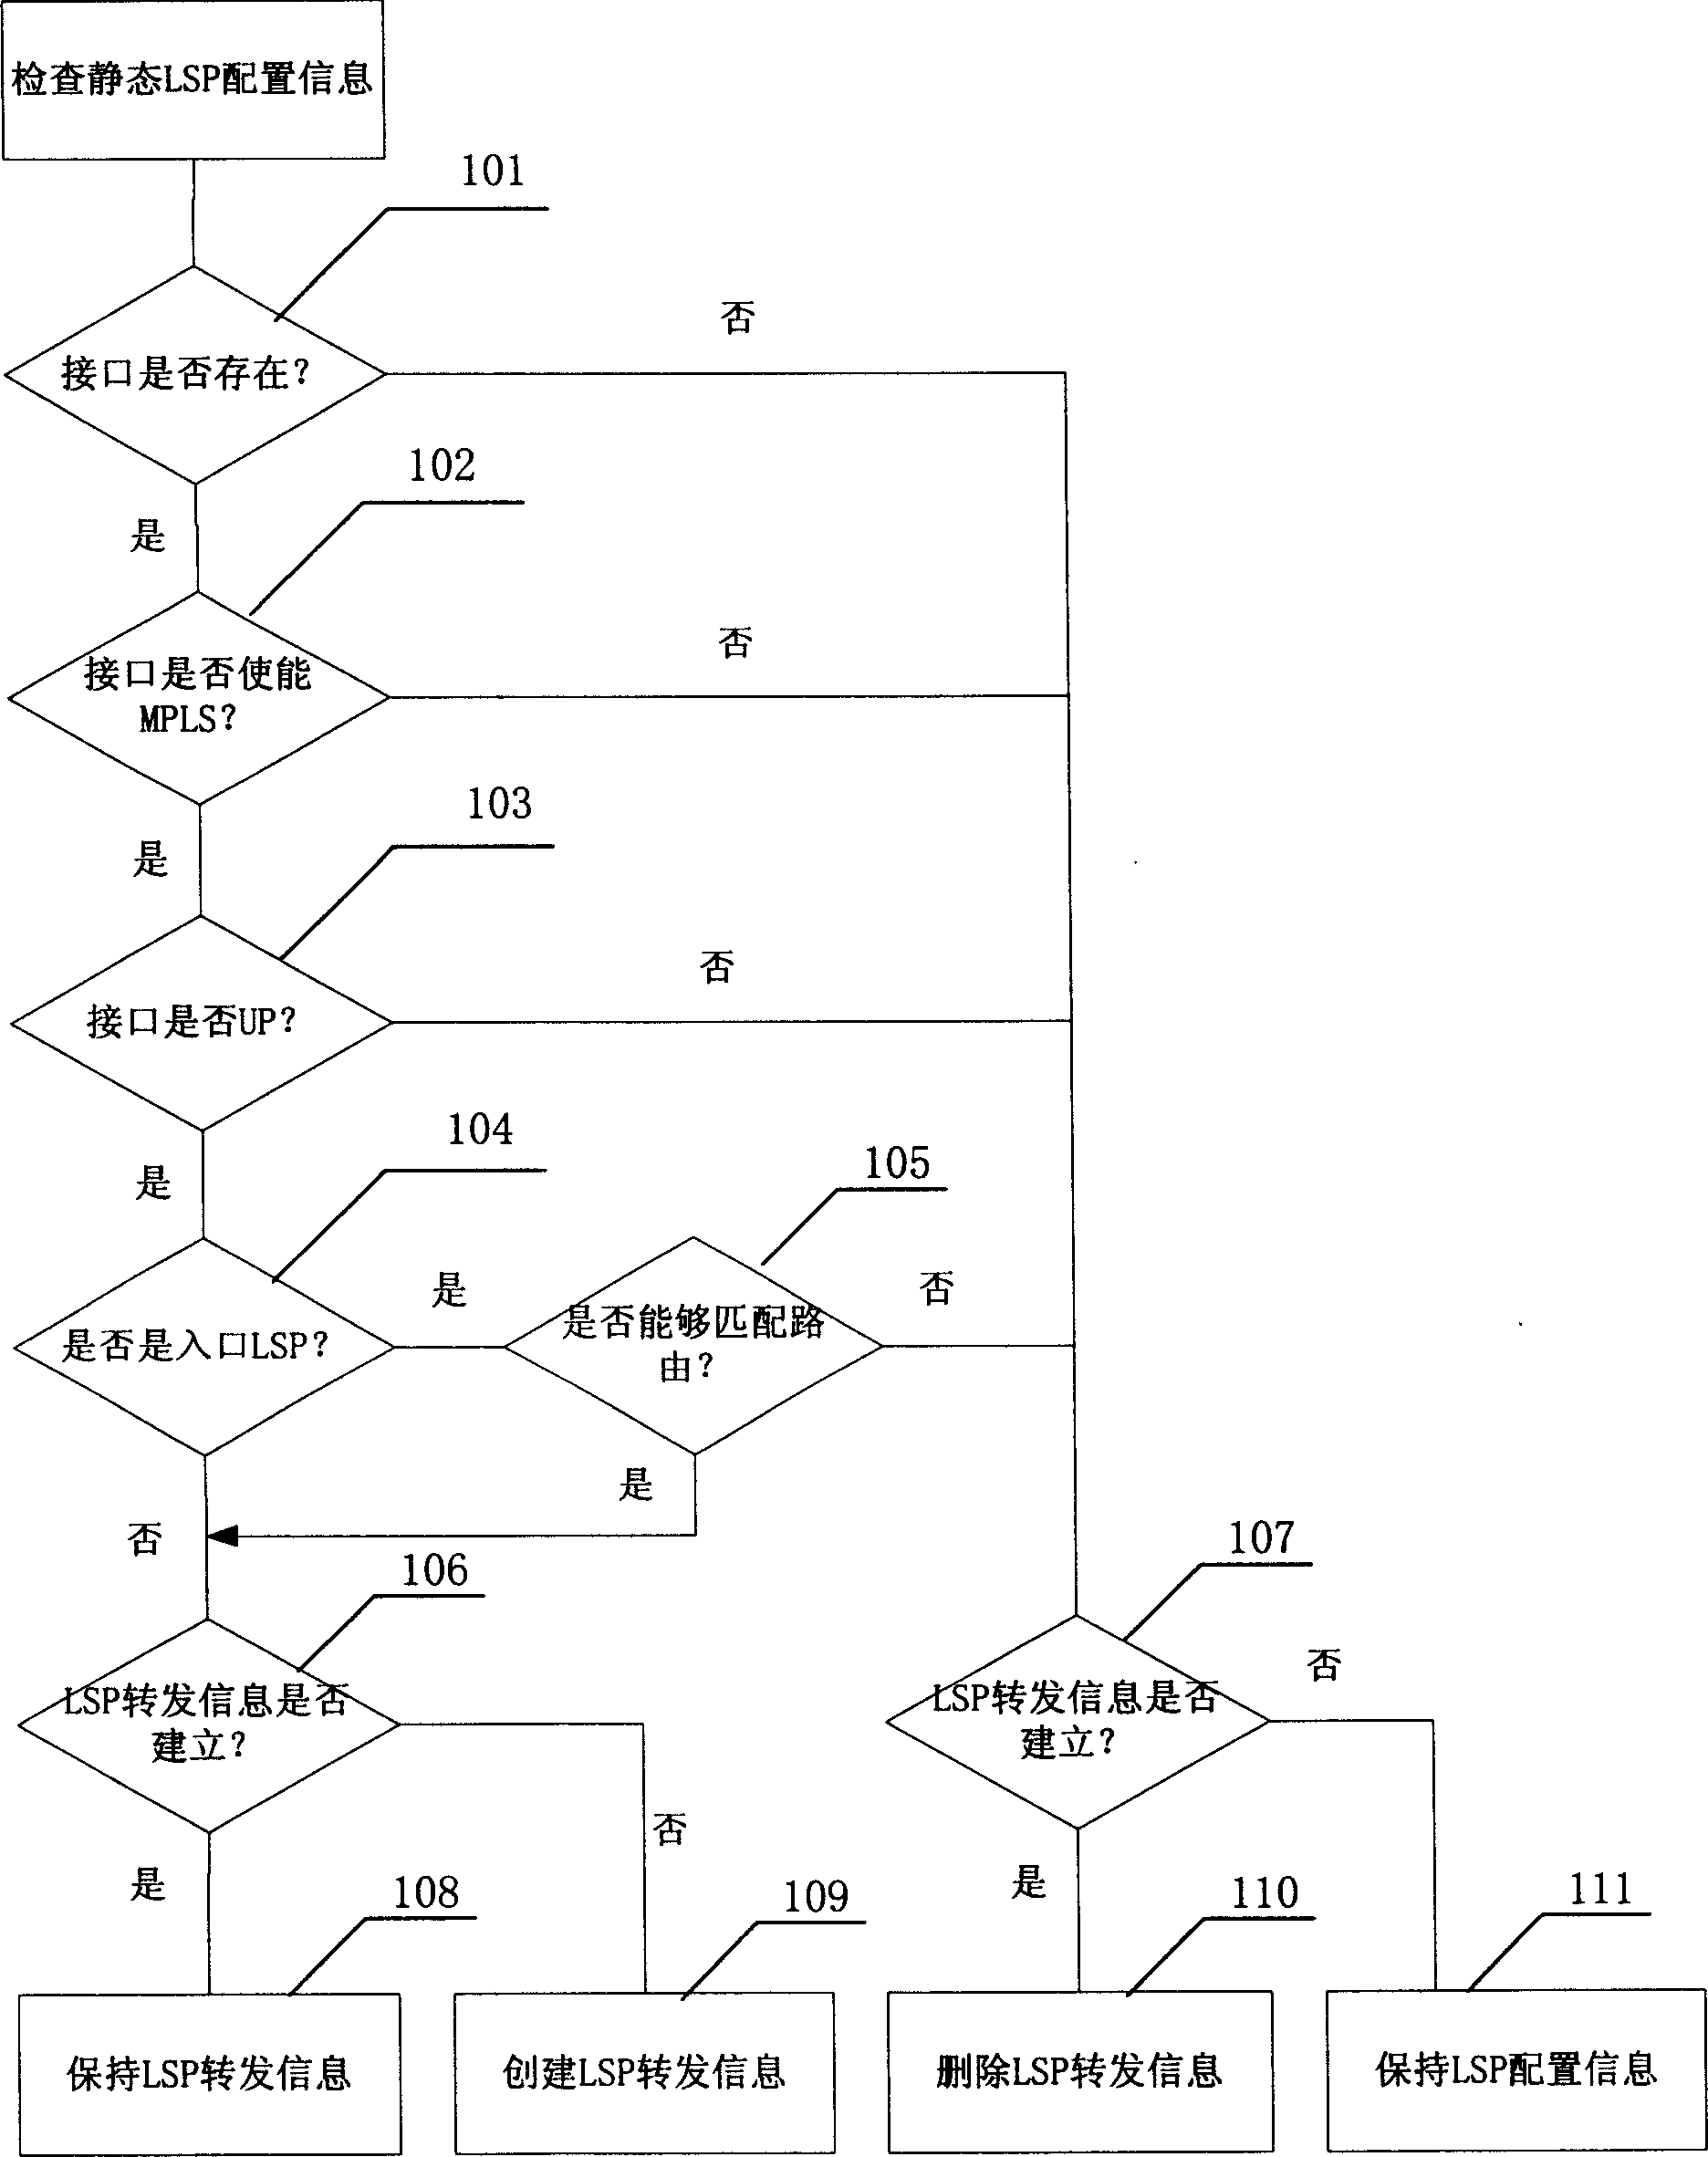 A method for establishing static label transmitting route